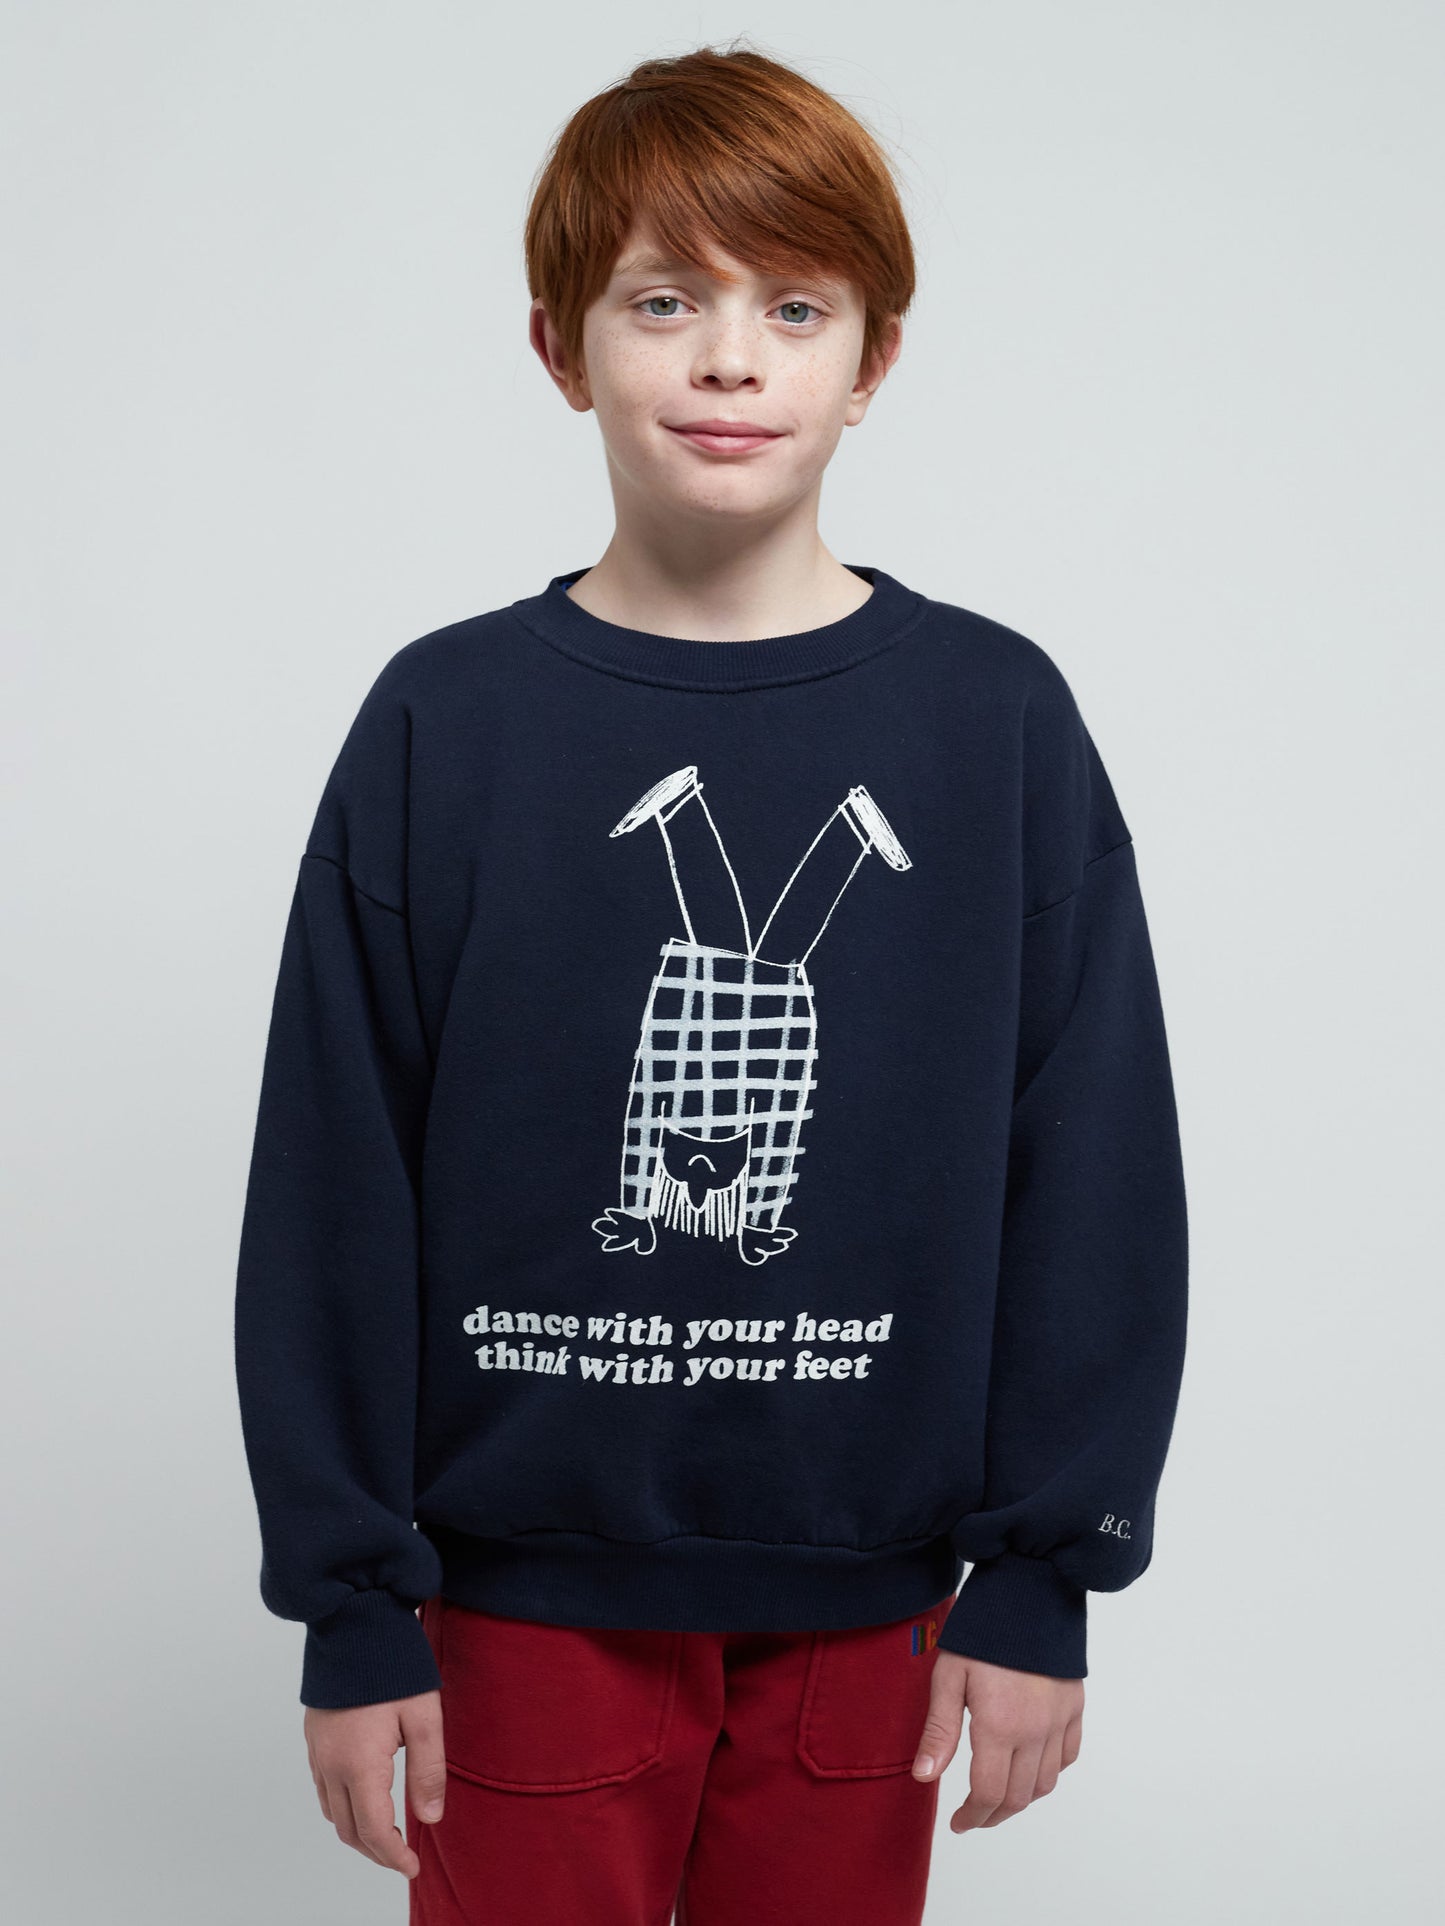 Headstand Child sweatshirt